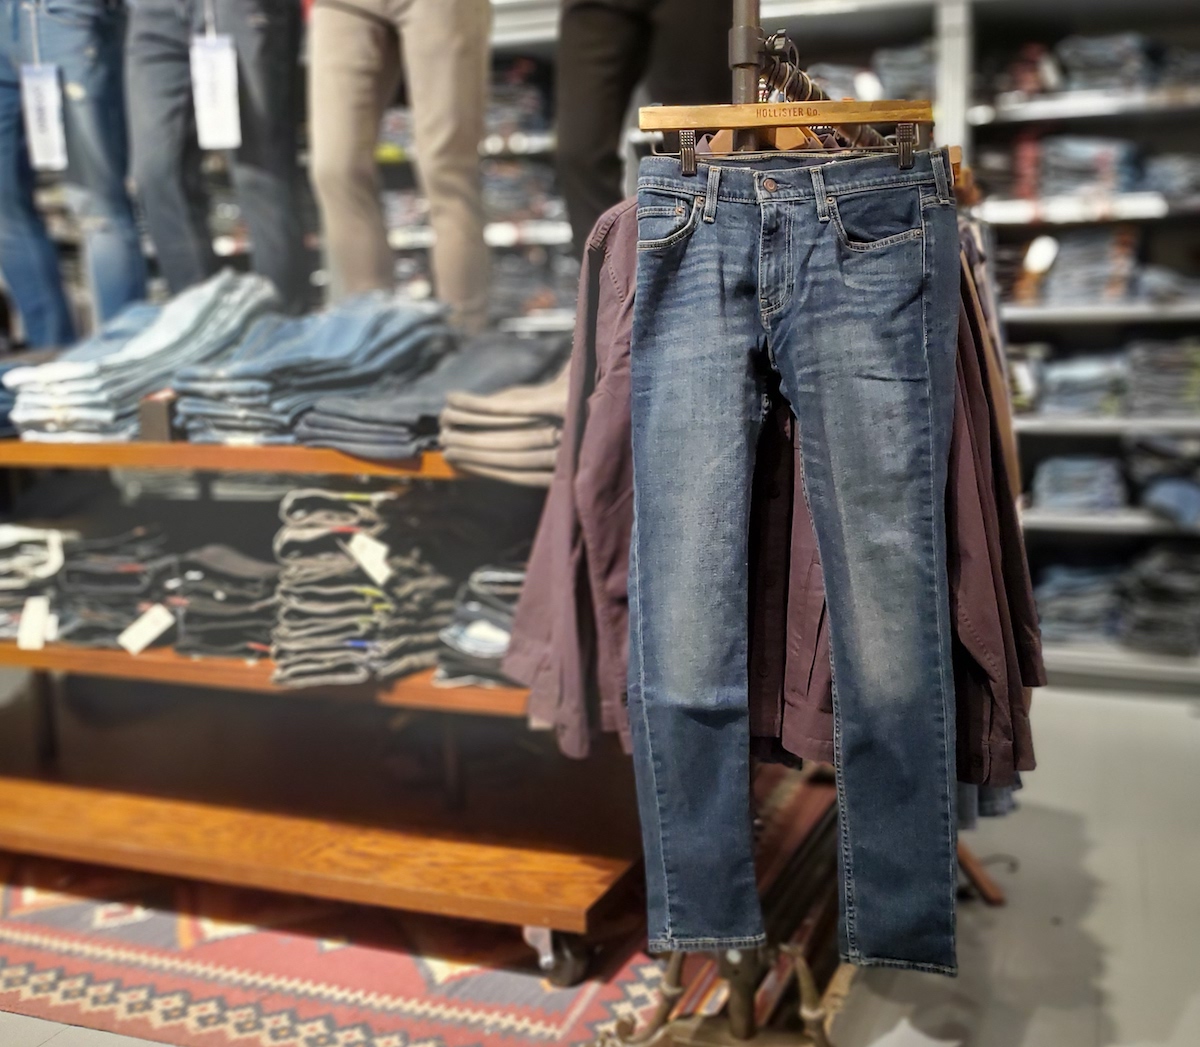 hollister jeans $25 sale